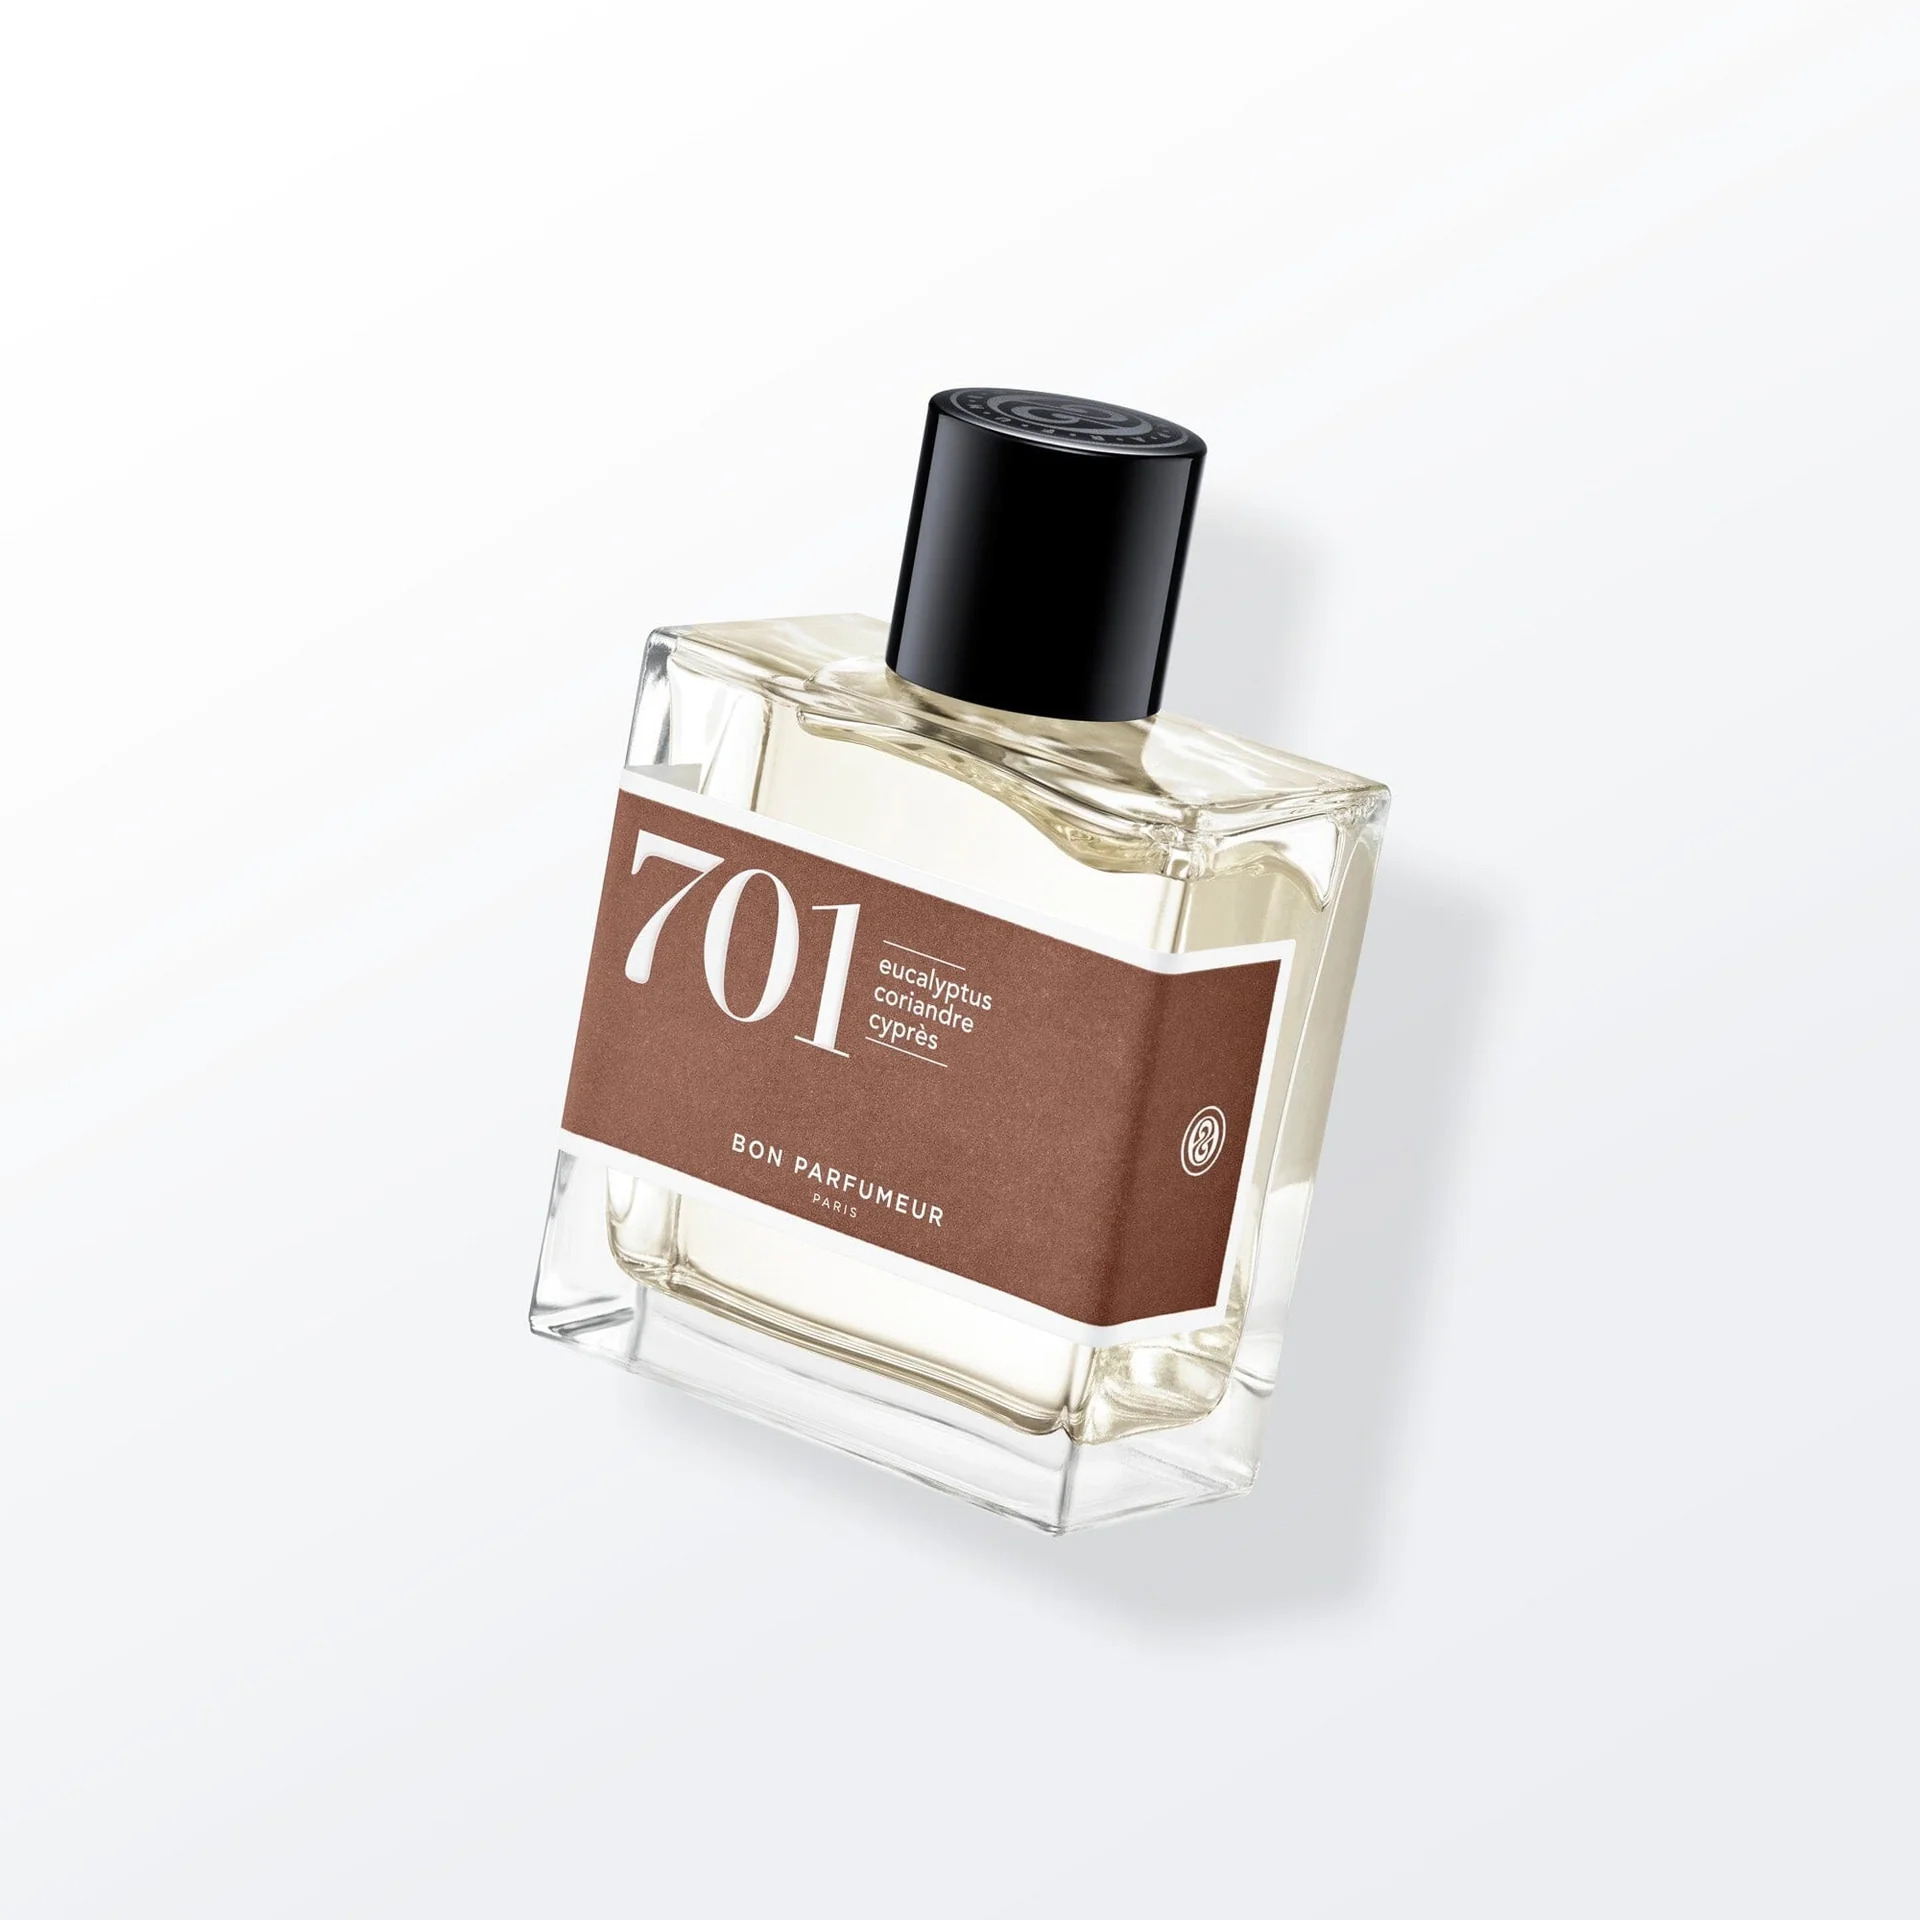 Bon Parfumeur Eau De Parfum 701 Eucalyptus, Coriander & Cypress 30ml